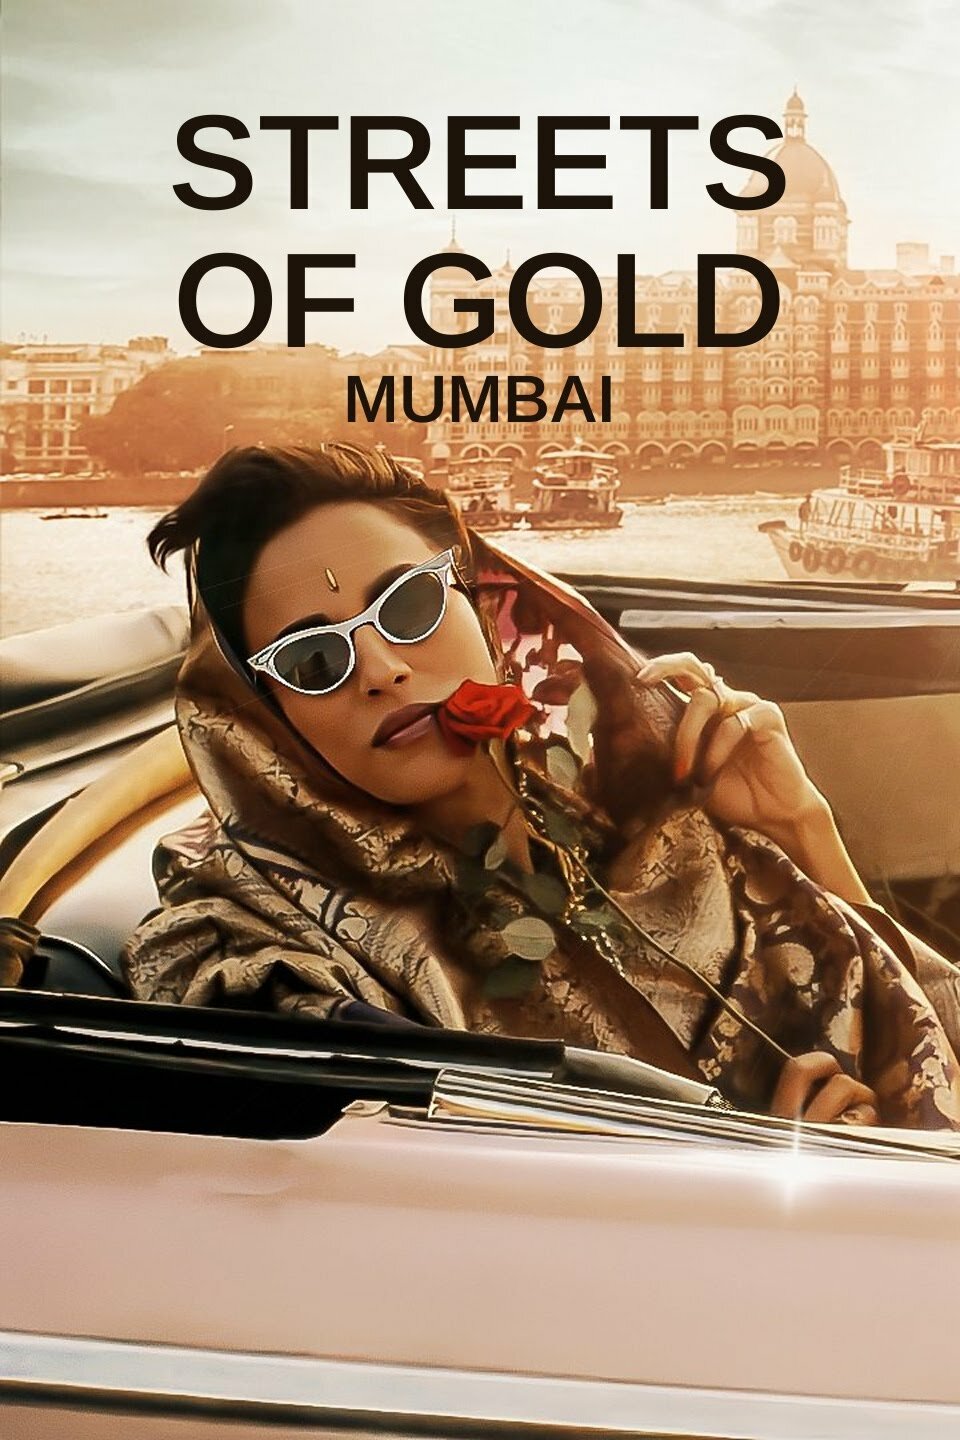 Streets of Gold: Mumbai ne zaman